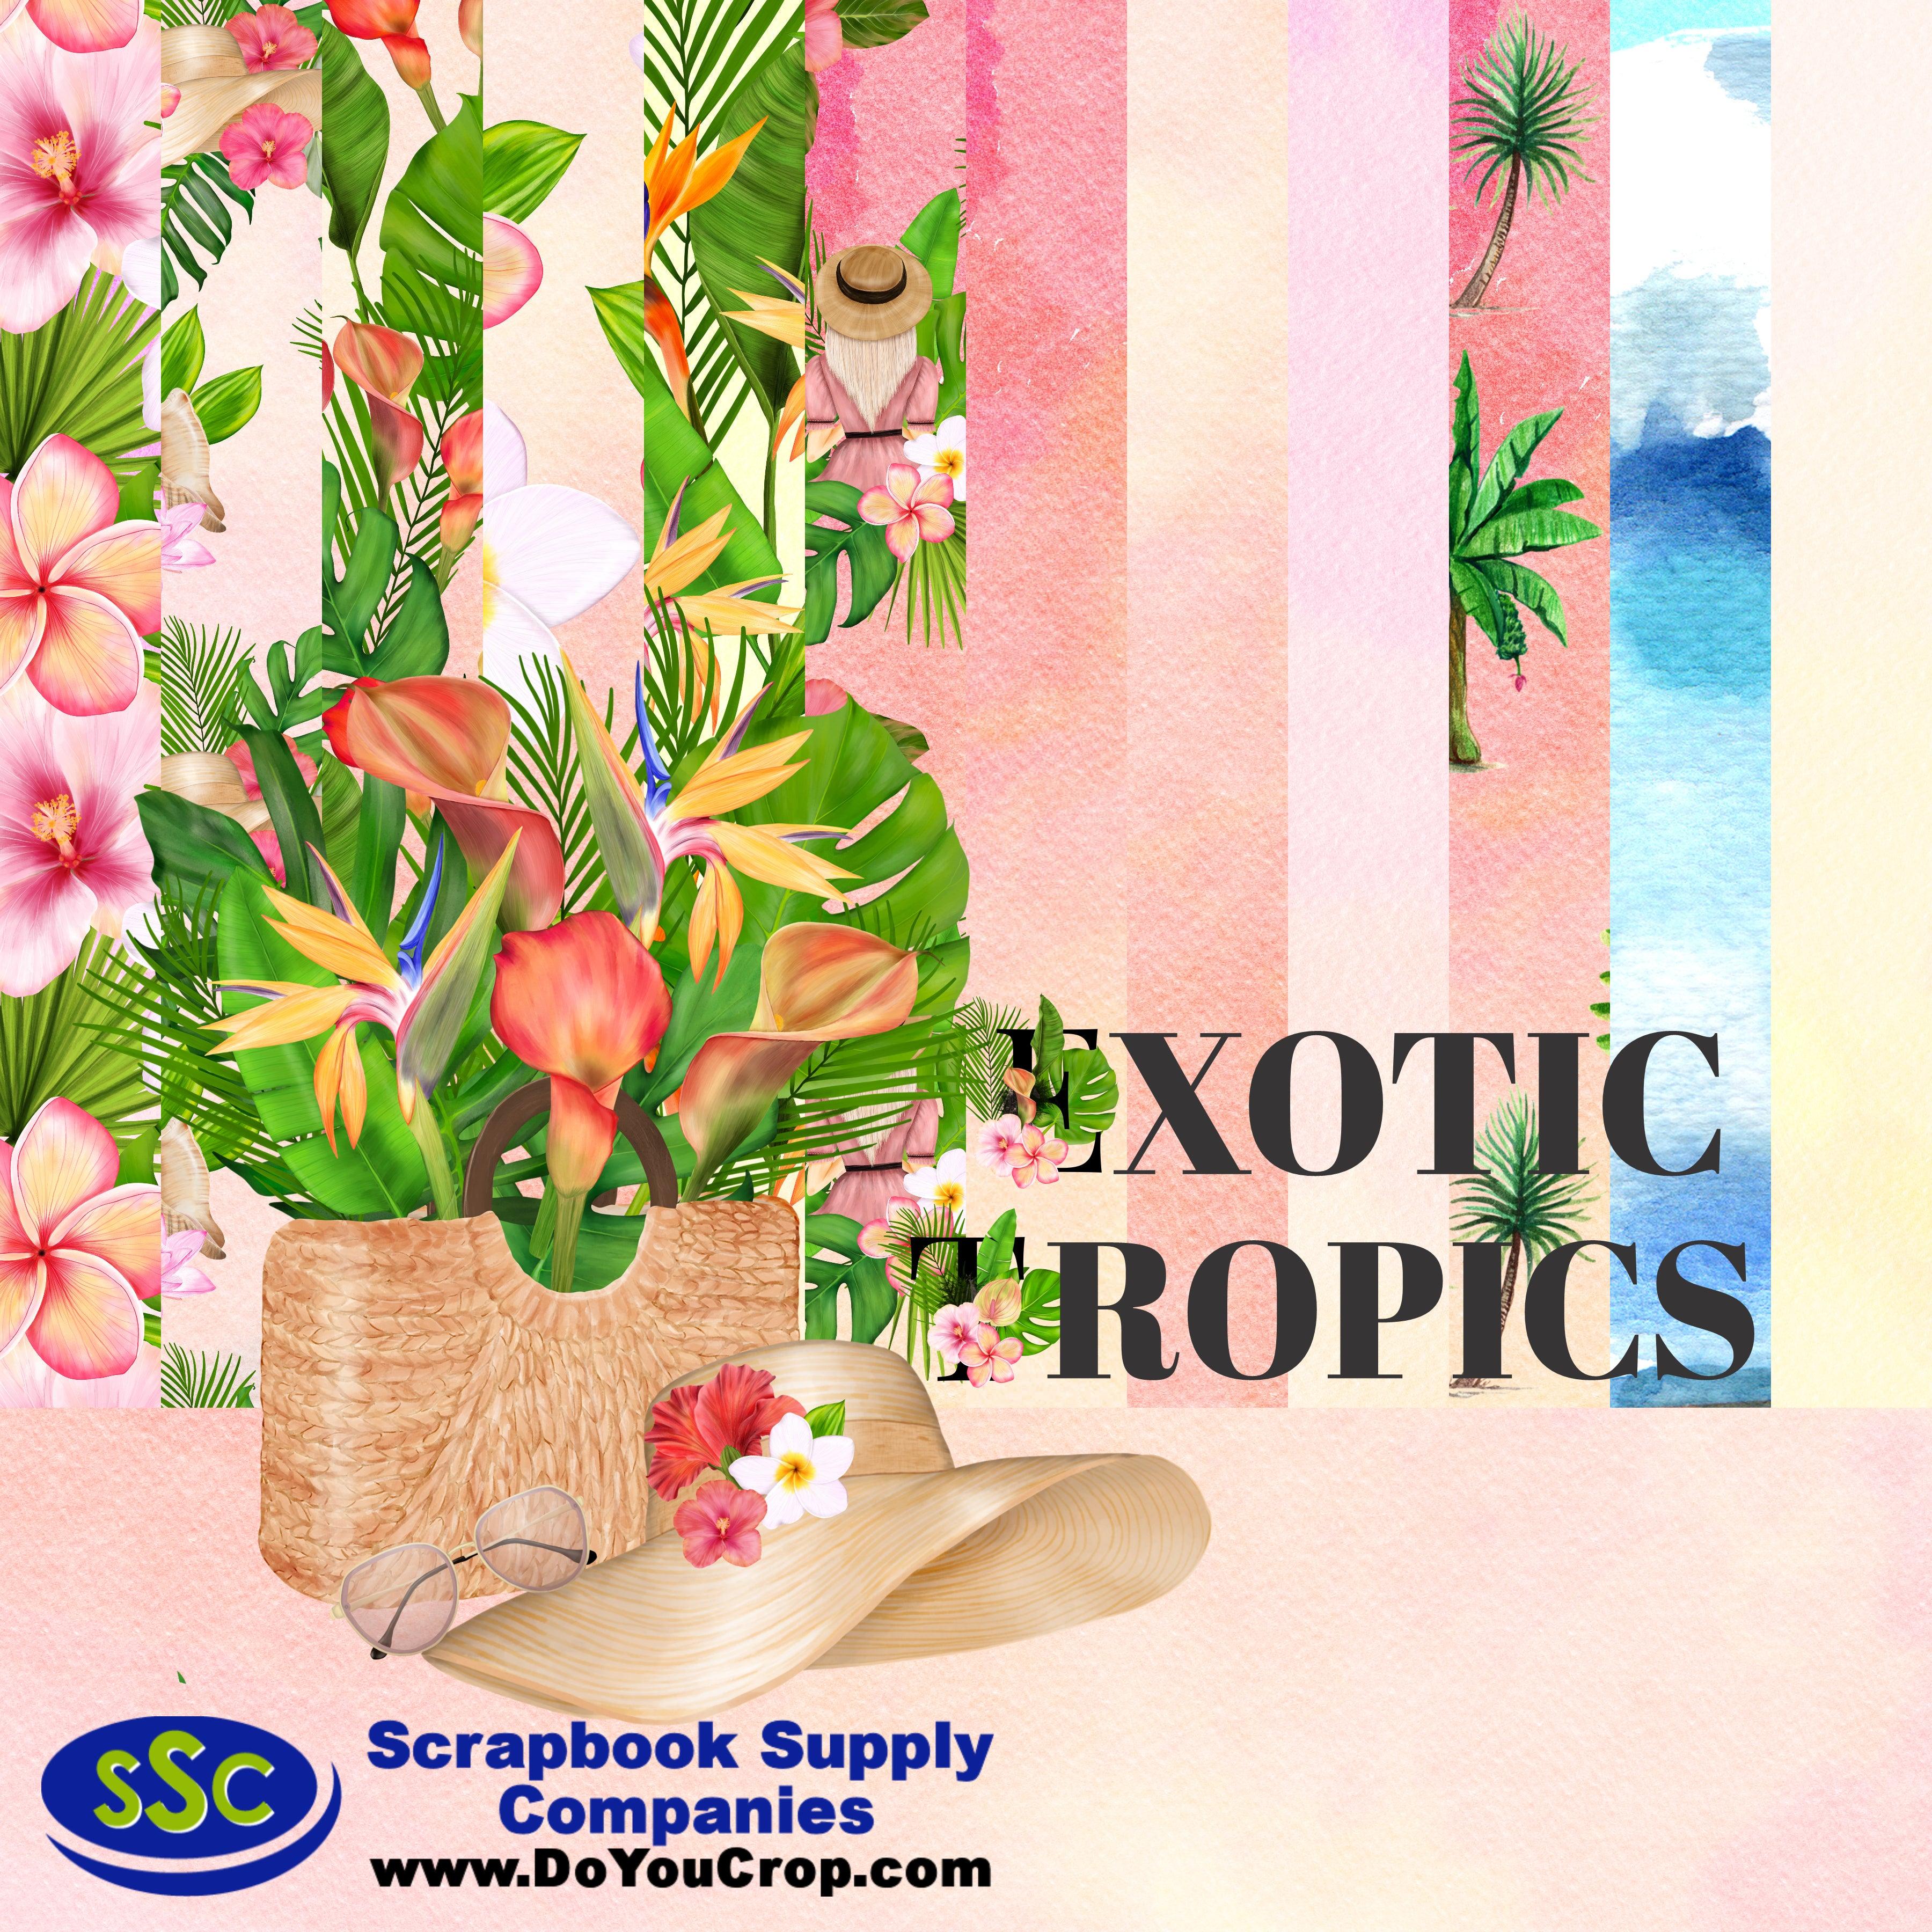 Exotic Tropics 12 x 12 Scrapbook Paper & Embellishment Kit by SSC Designs - Scrapbook Supply Companies